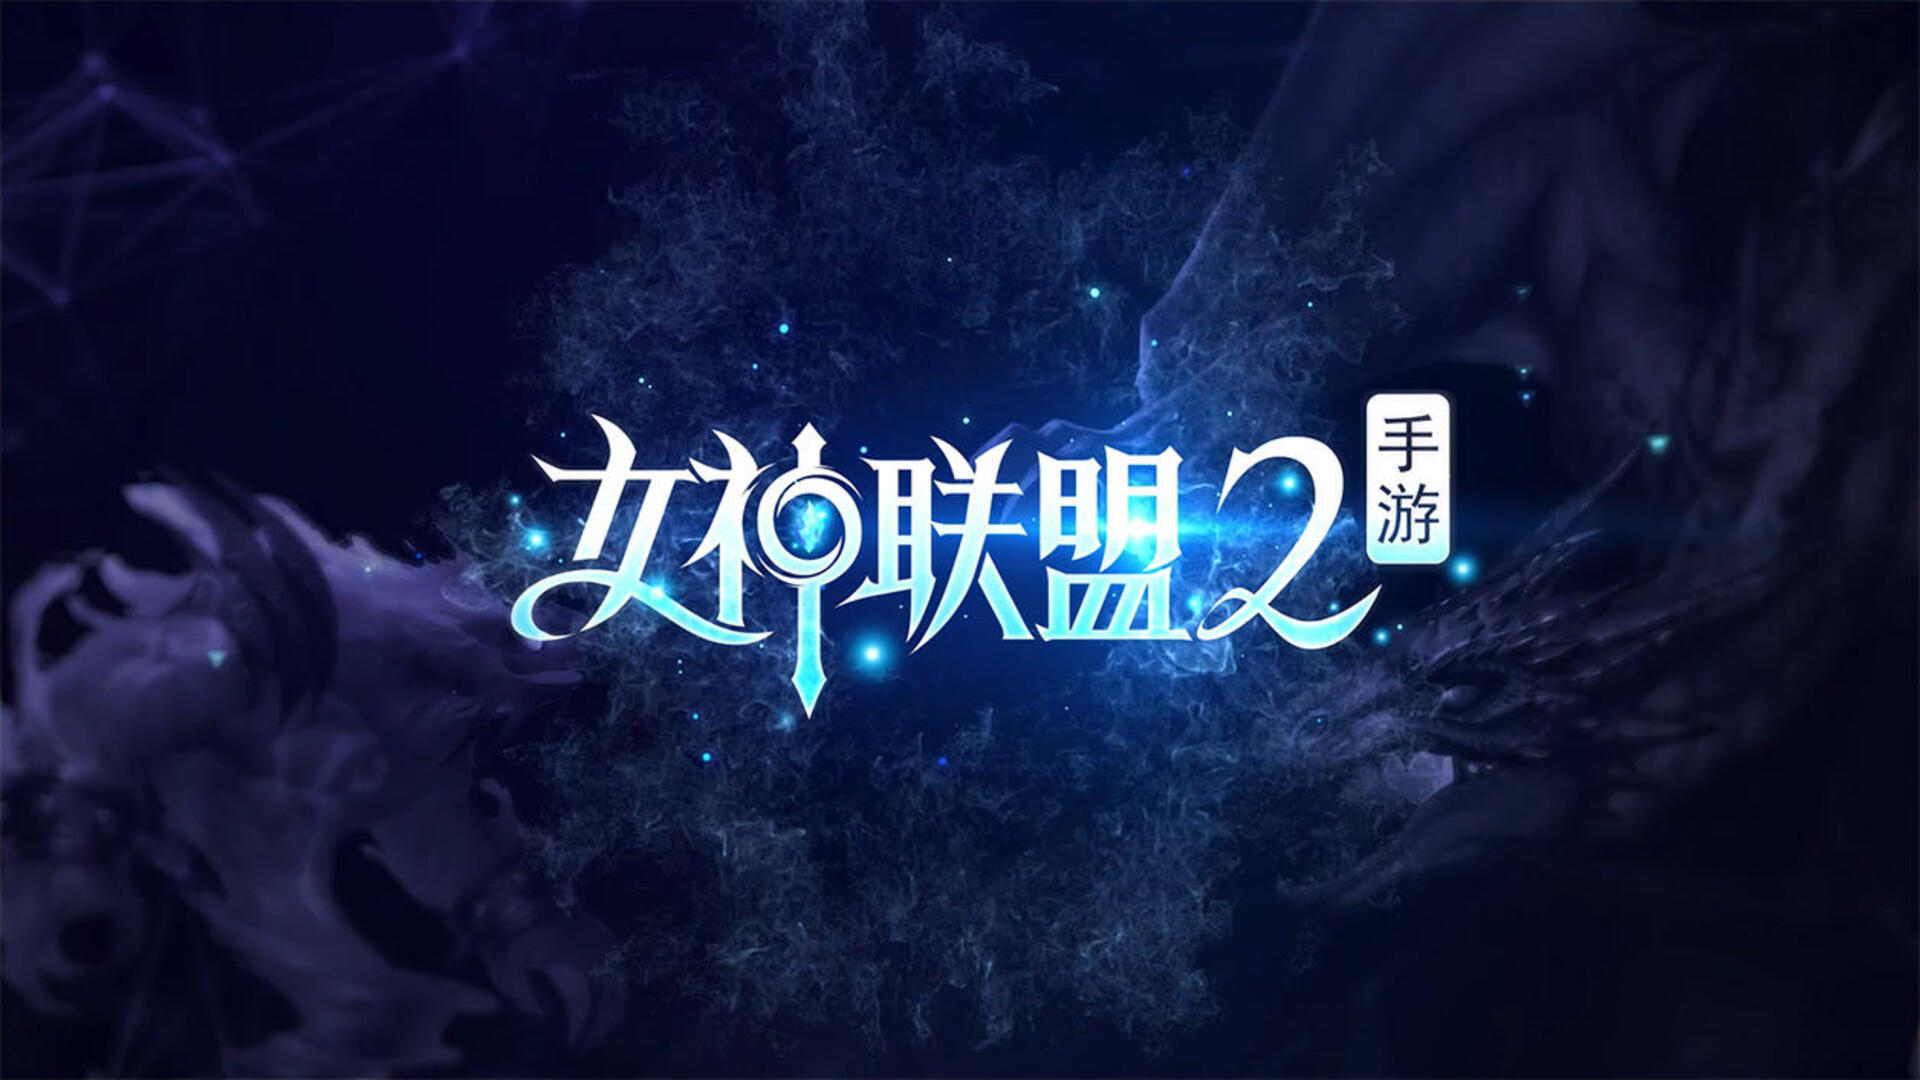 Banner of 女神聯盟2 2.13.0.7